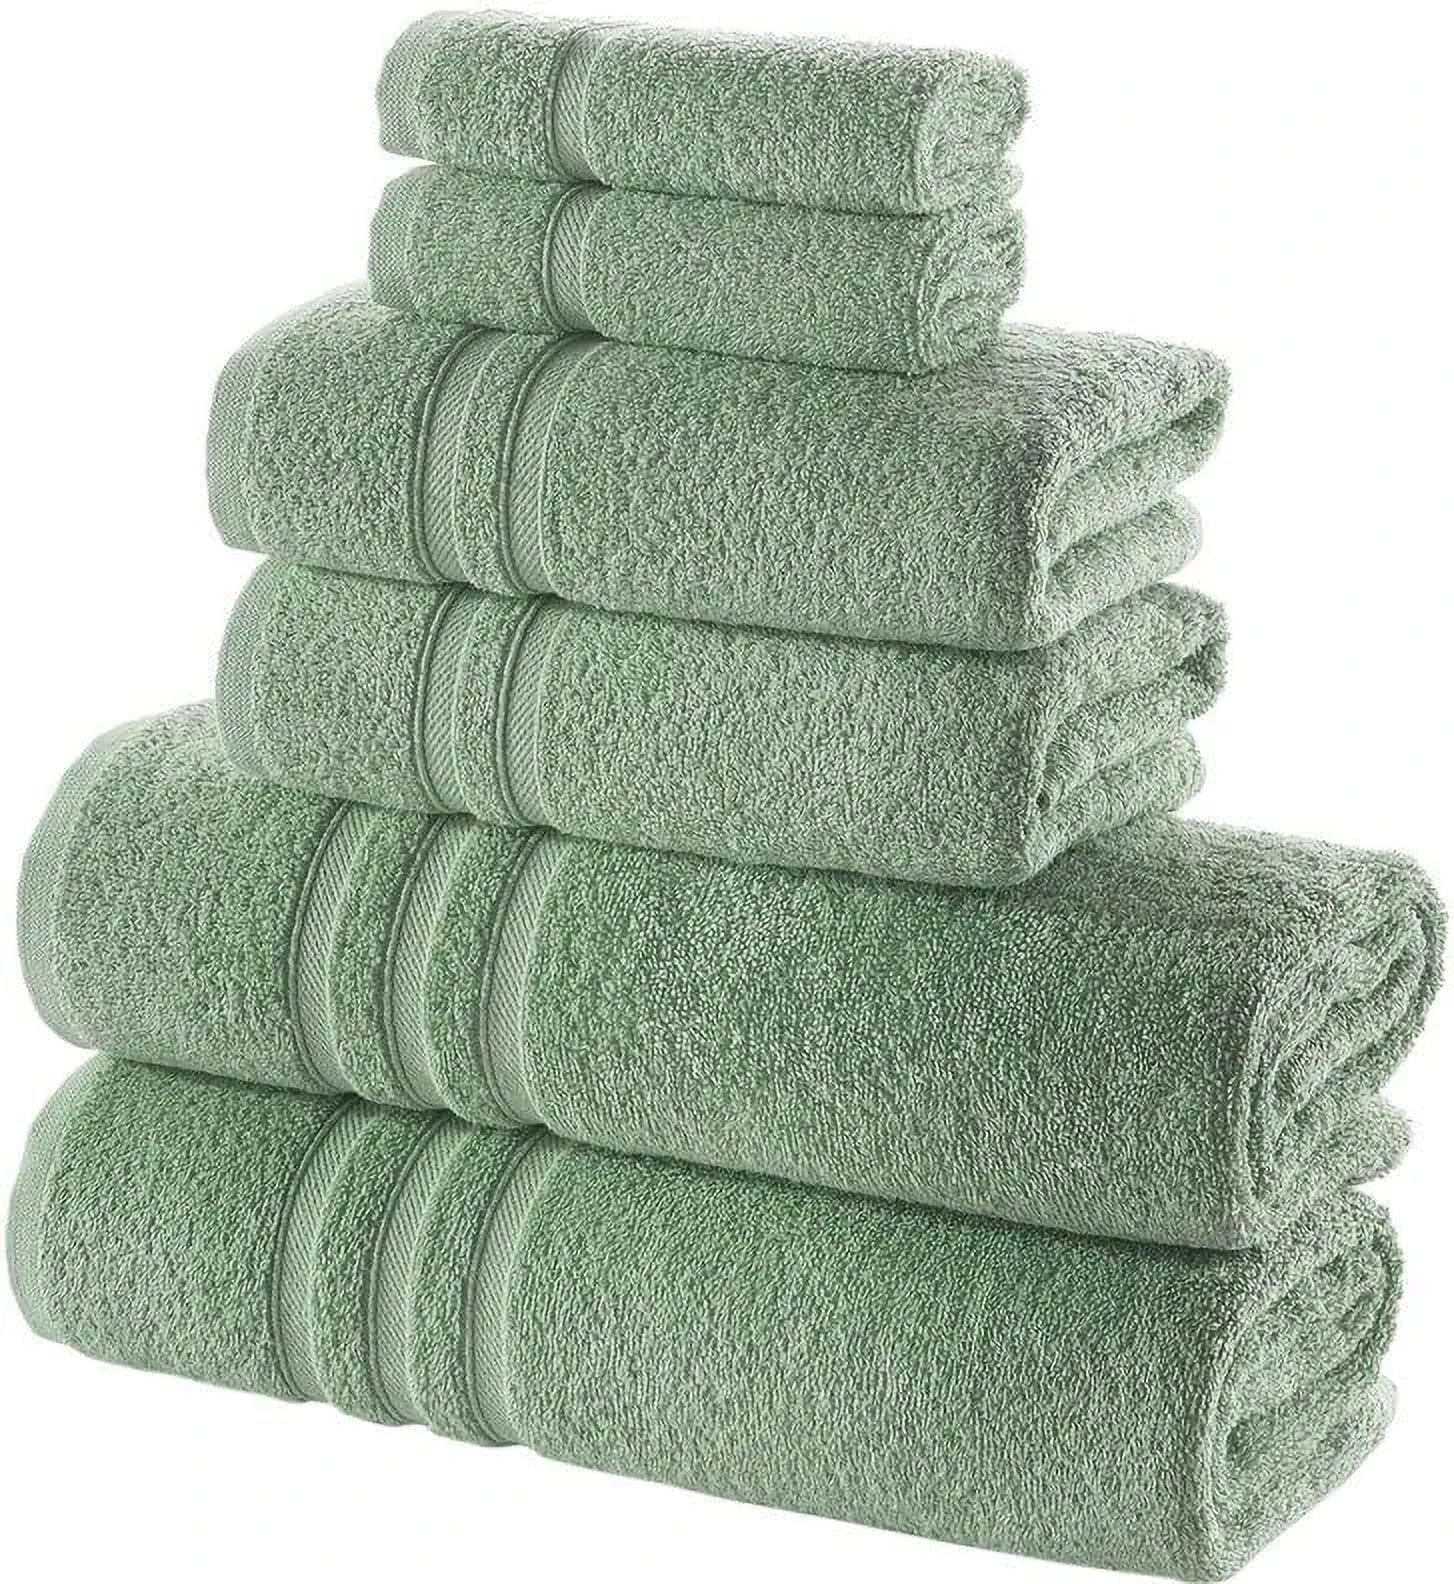 Gamma Tacky Towel ( Light Green )